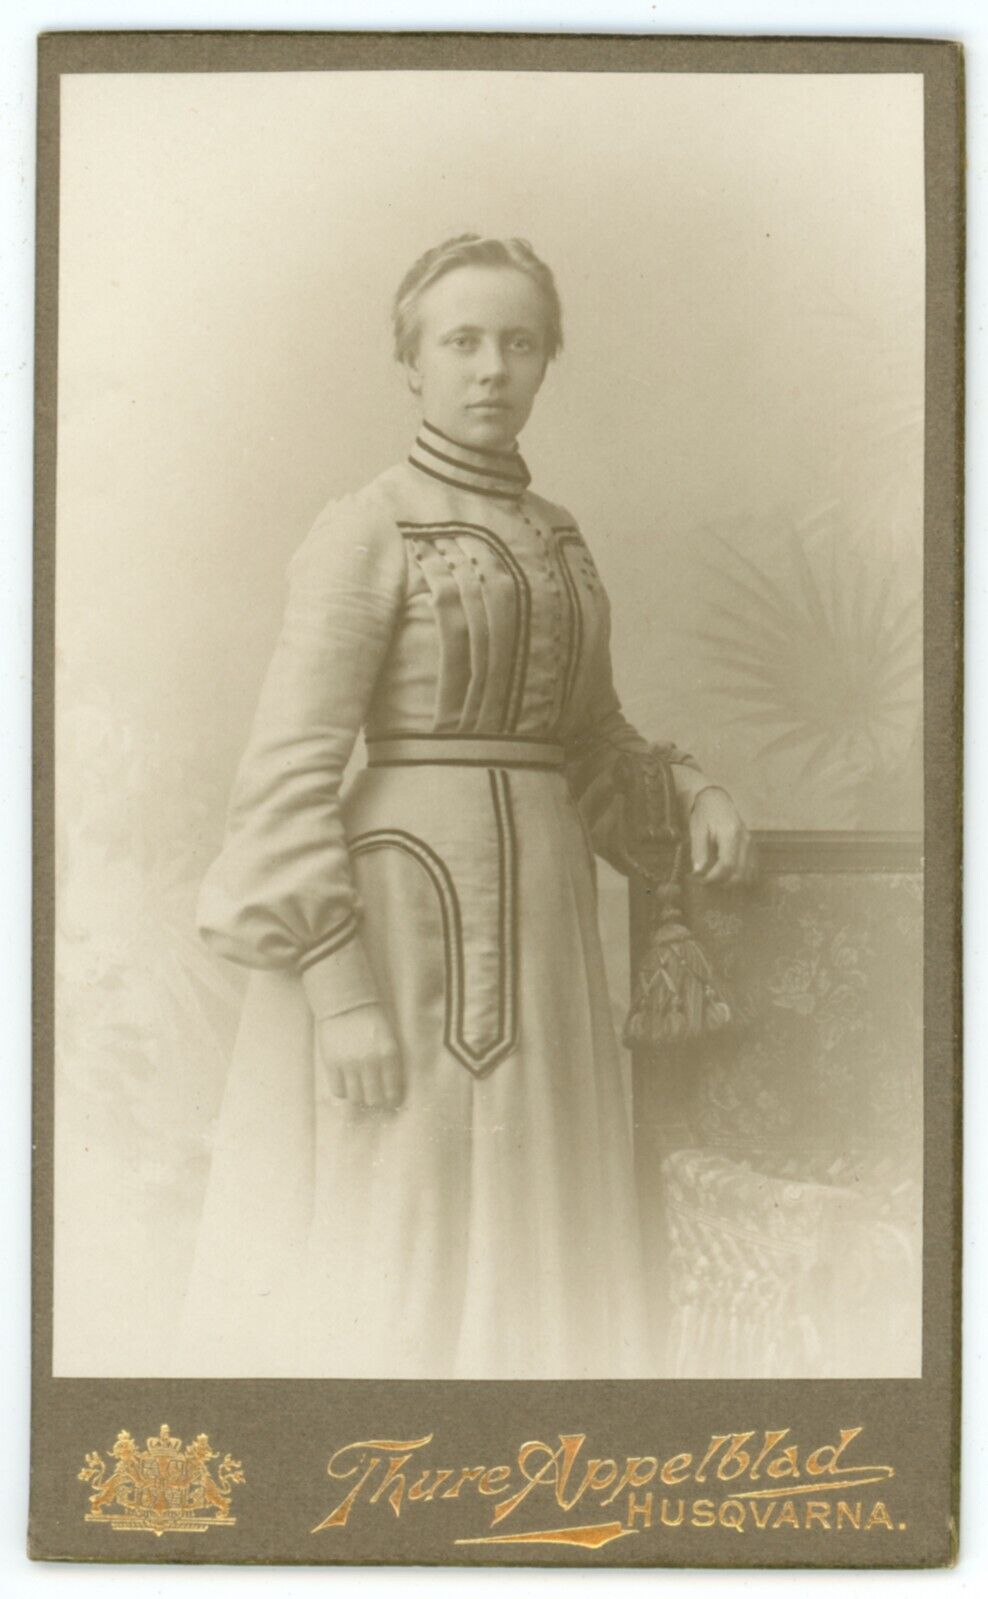 CIRCA 1904 CDV Swedish Woman Beautiful Dress Thure Appelblad Husqvarna Sweden